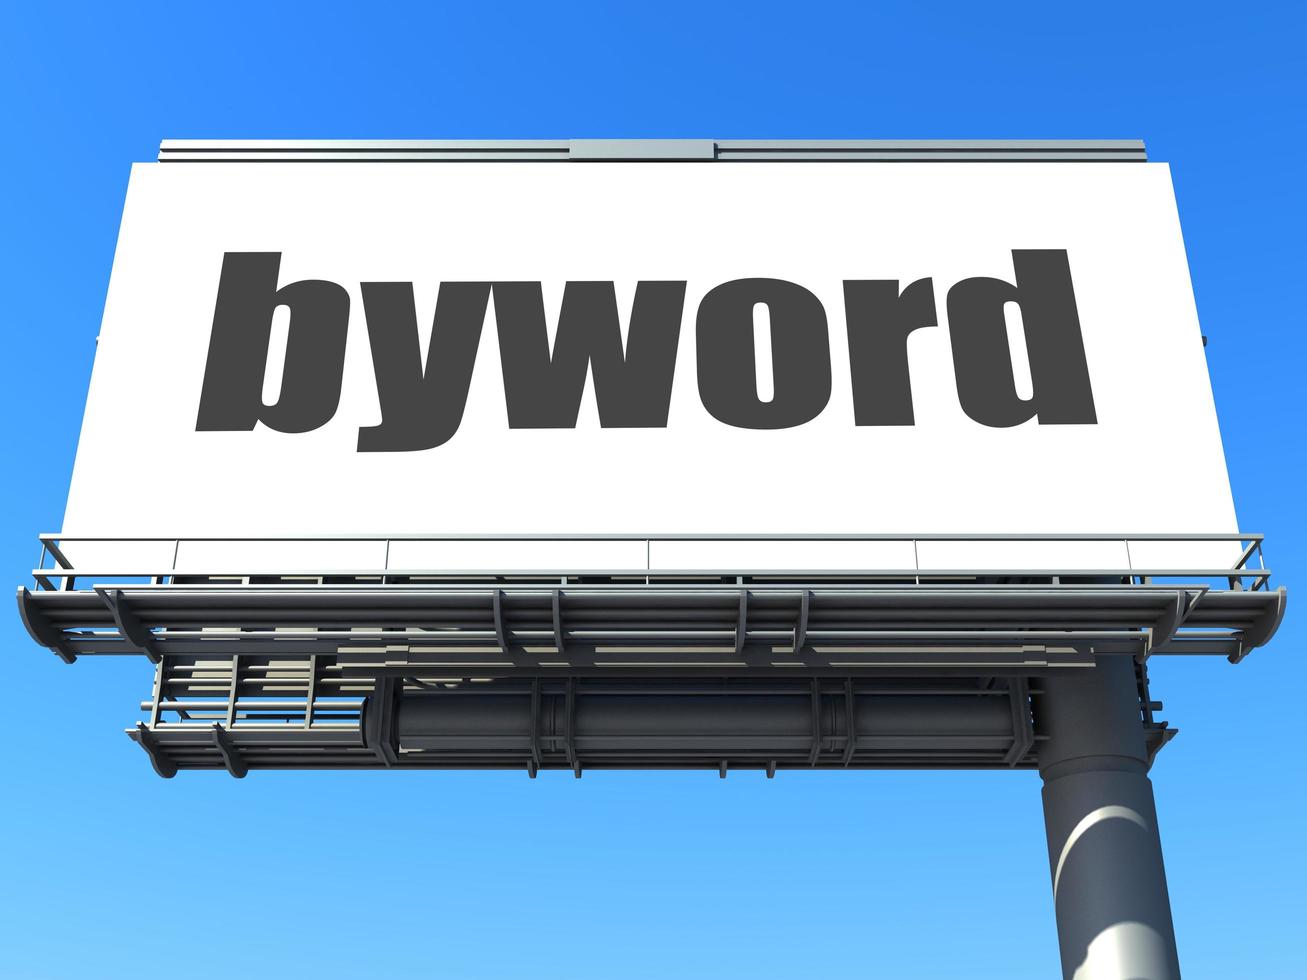 byword word on billboard photo